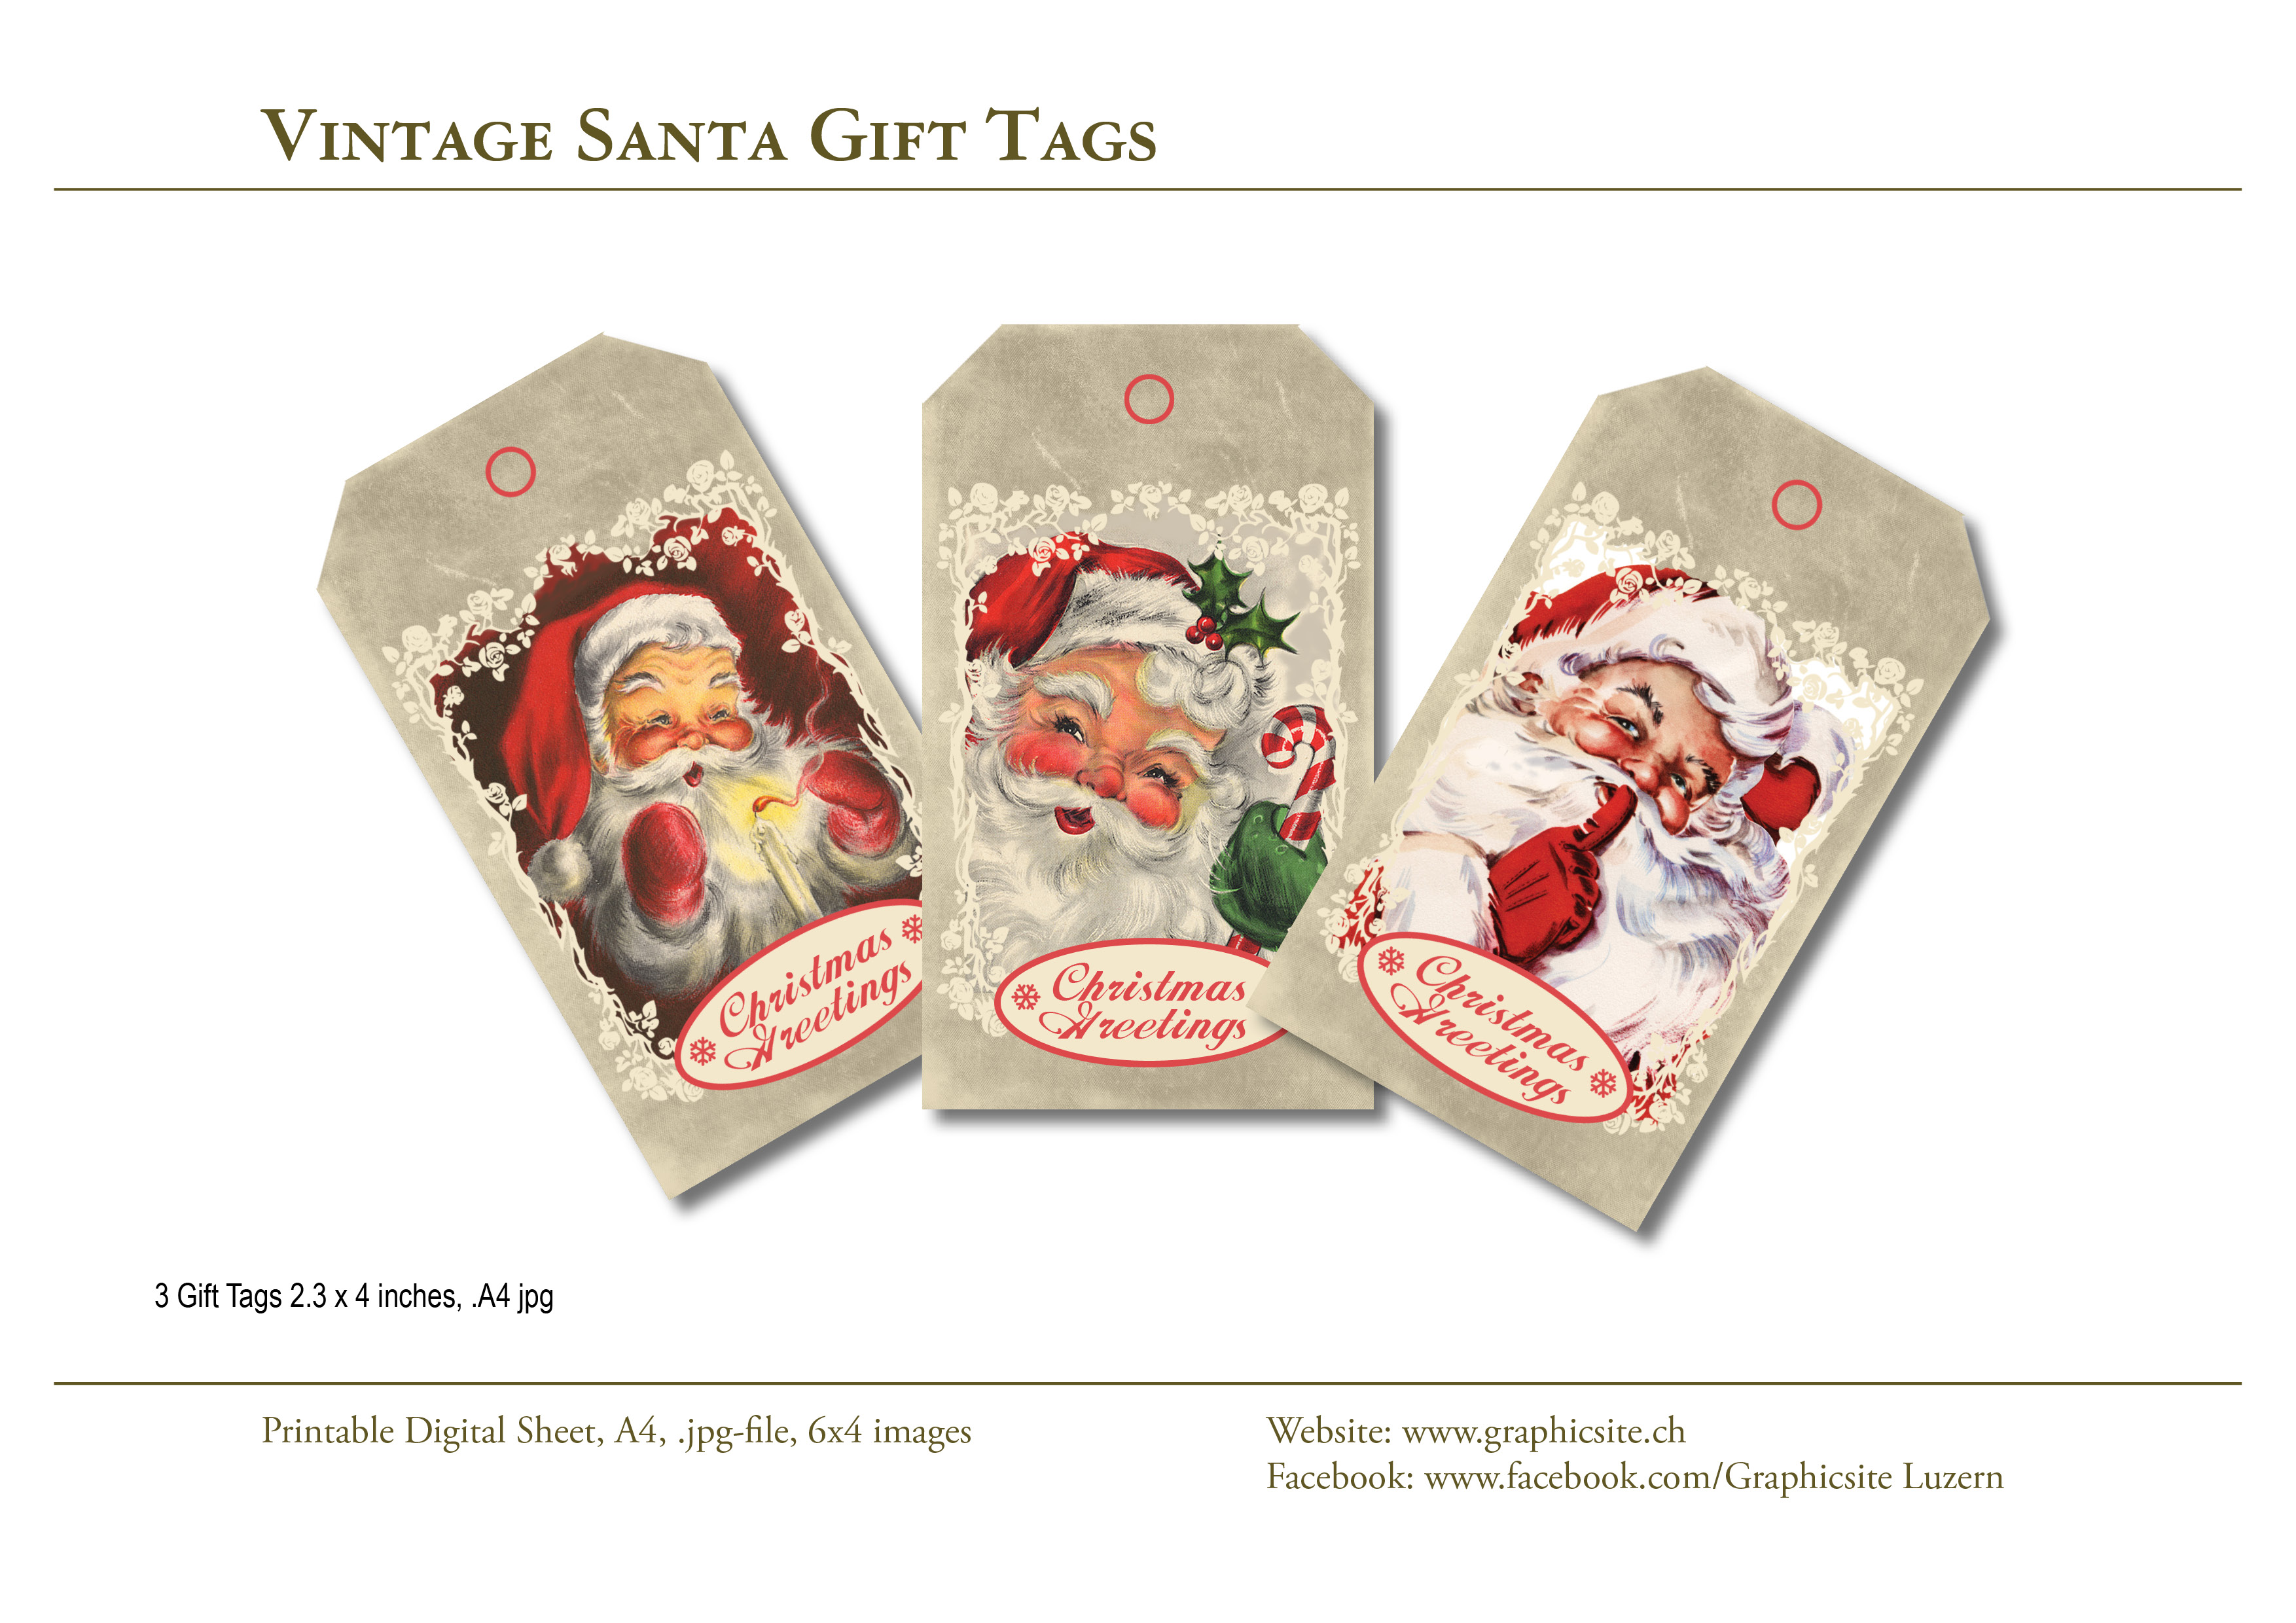 Printable Digital Sheets - Christmas - VintageSanta_GiftTags - #christmas, #gift, #tags, #cards, #labels, #printables, #stationary, #christmas, #santa, #claus, #vintage,